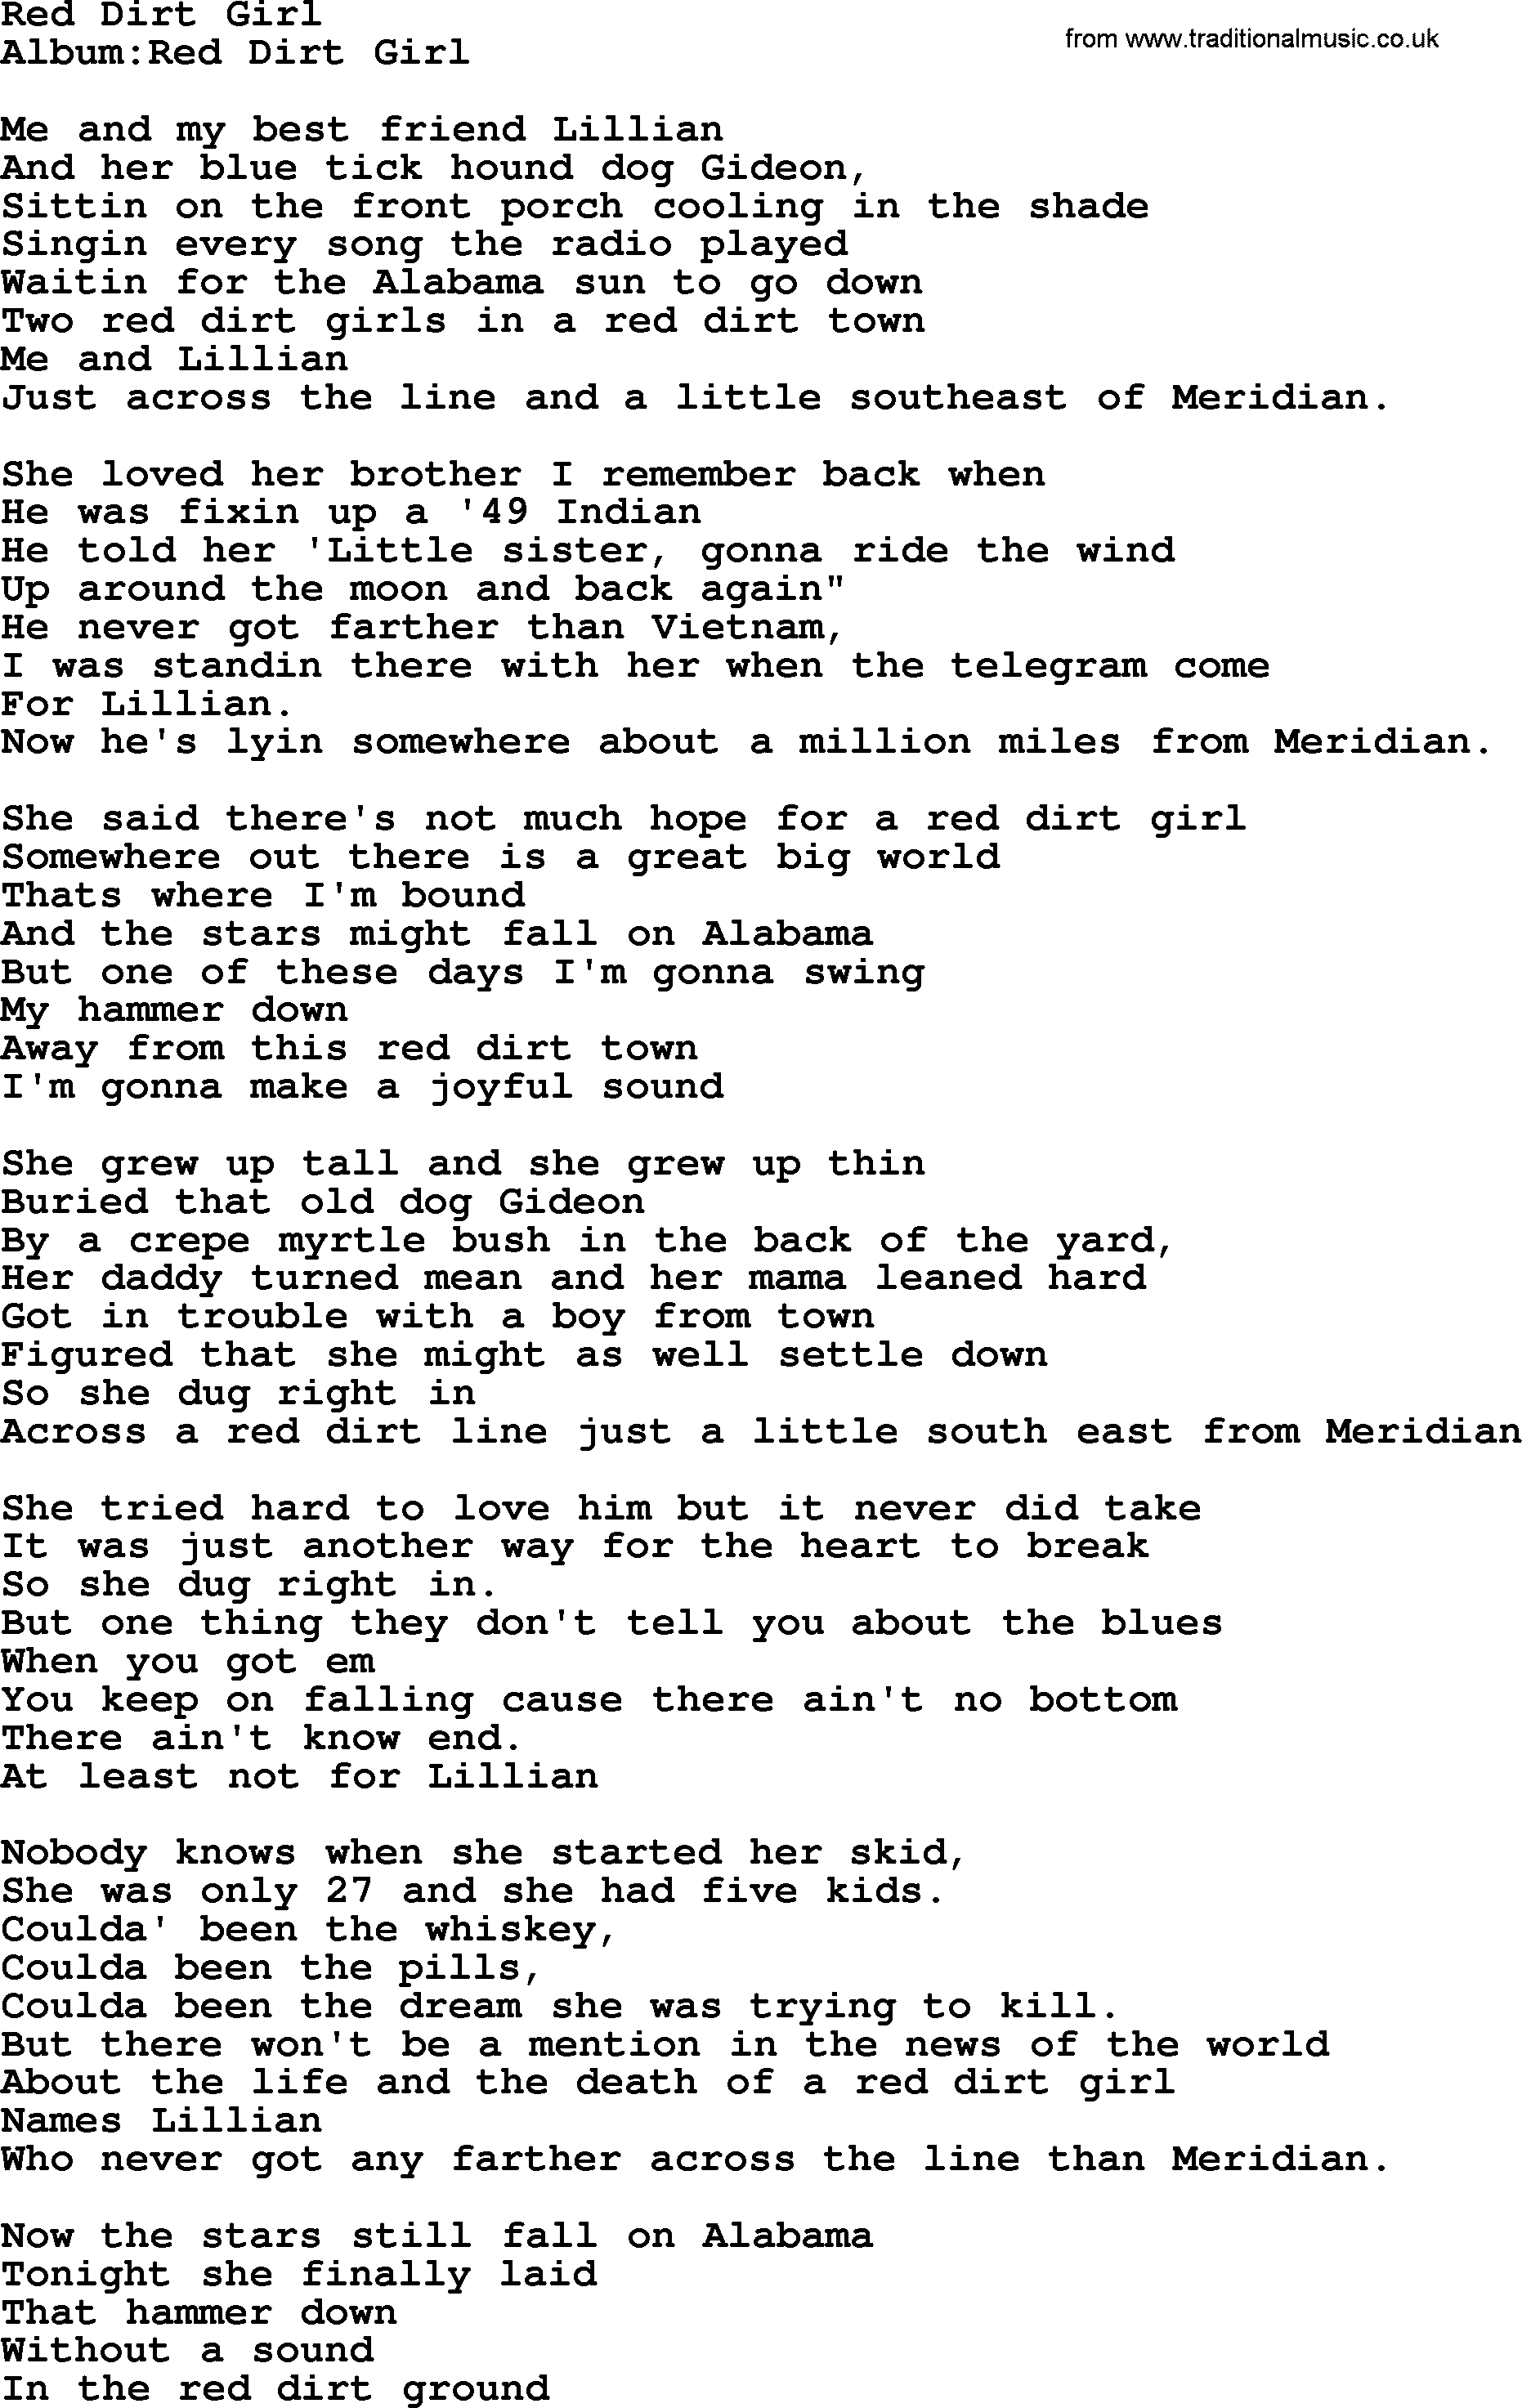 Emmylou Harris song: Red Dirt Girl lyrics